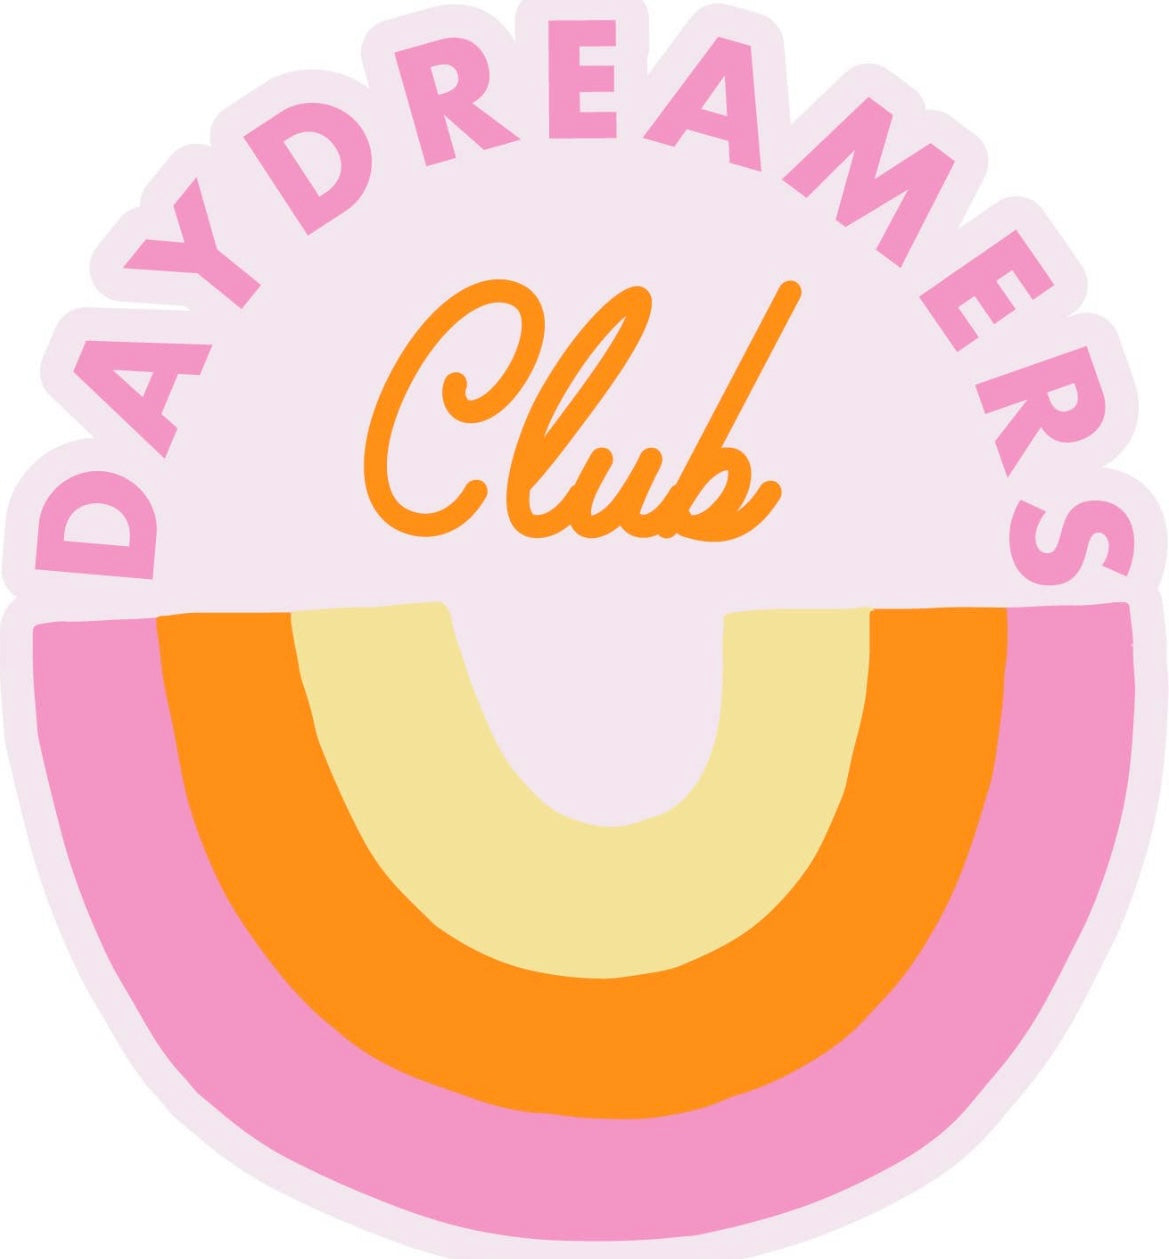 Day dreamers club vinyl sticker